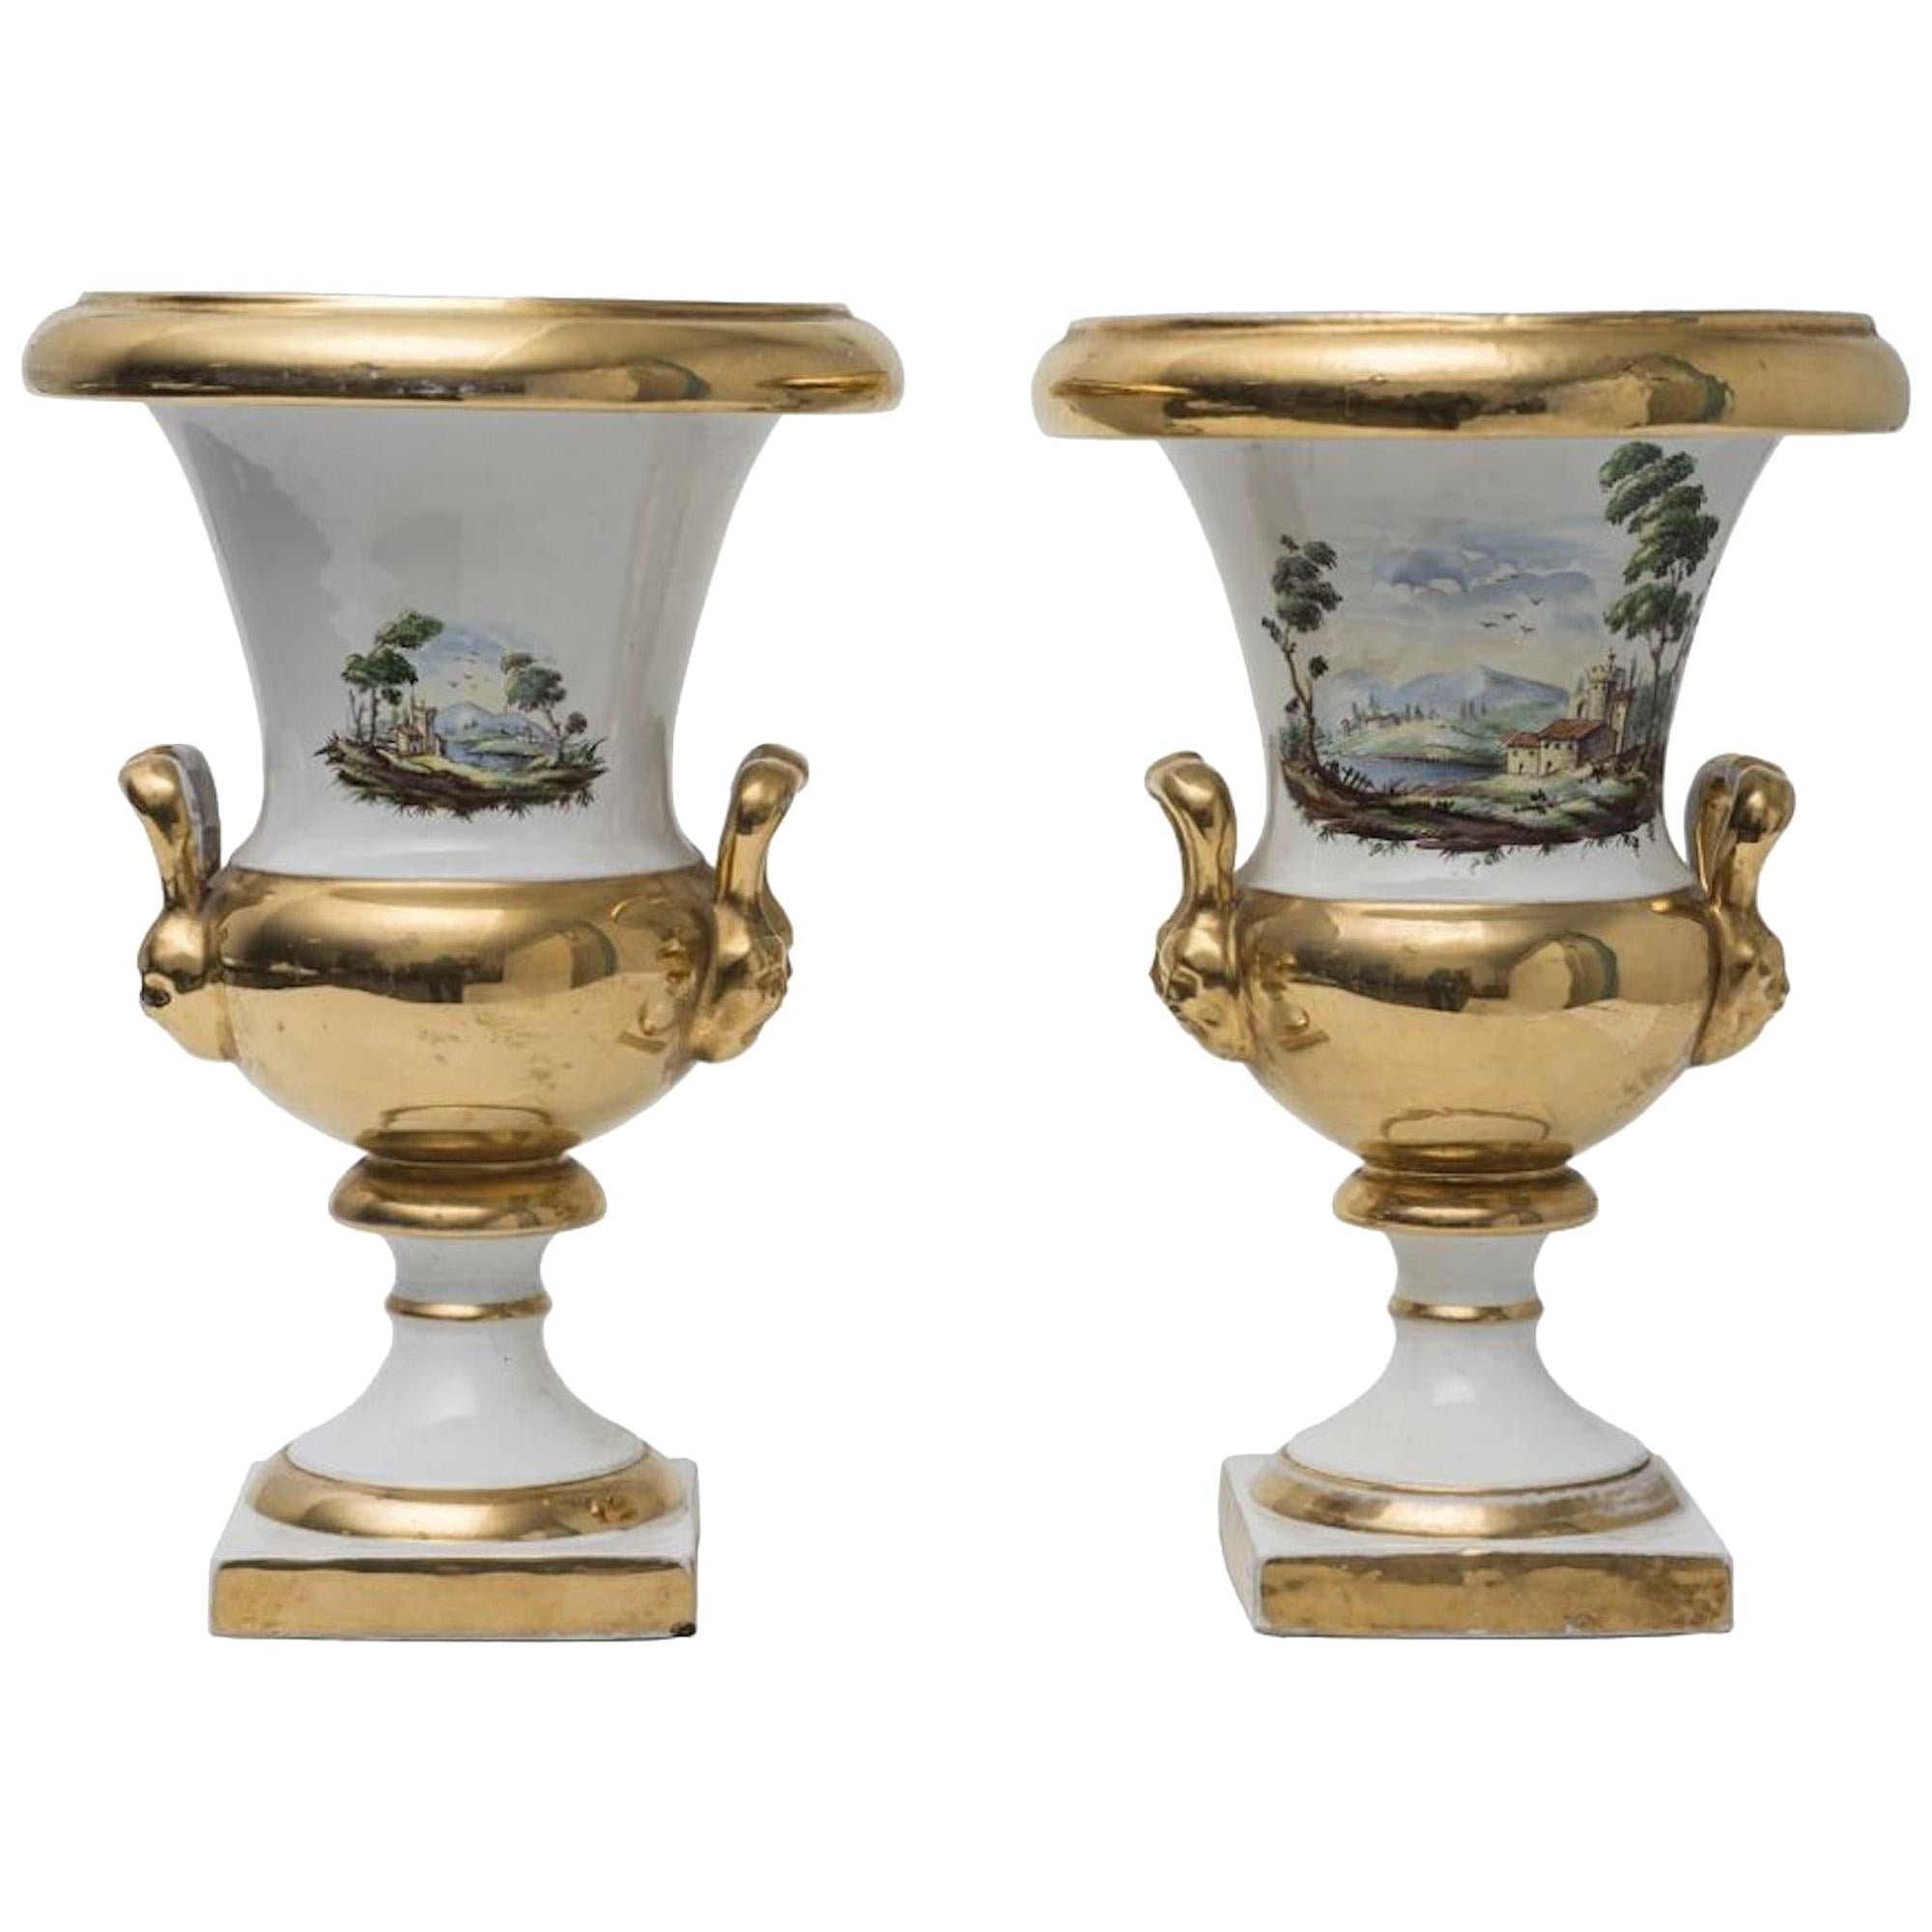 Pair of Porcelain Vases, Medicean Style, Italian Manufacture, 19th Century